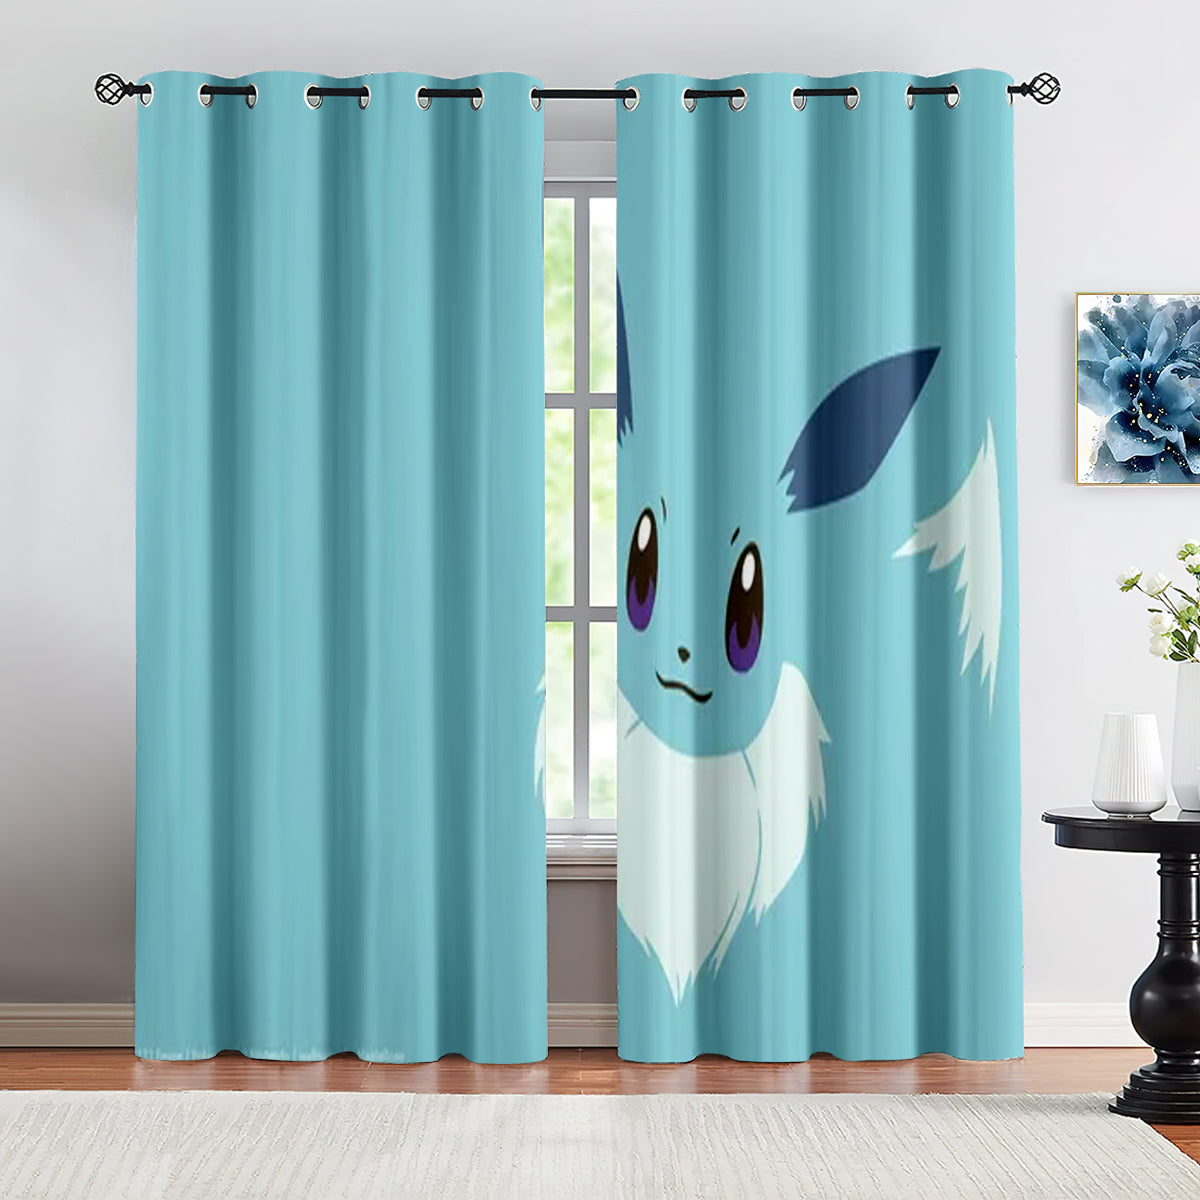 Pokemon Fennekin Flareon Blackout Curtains Drapes for Window Treatment Set